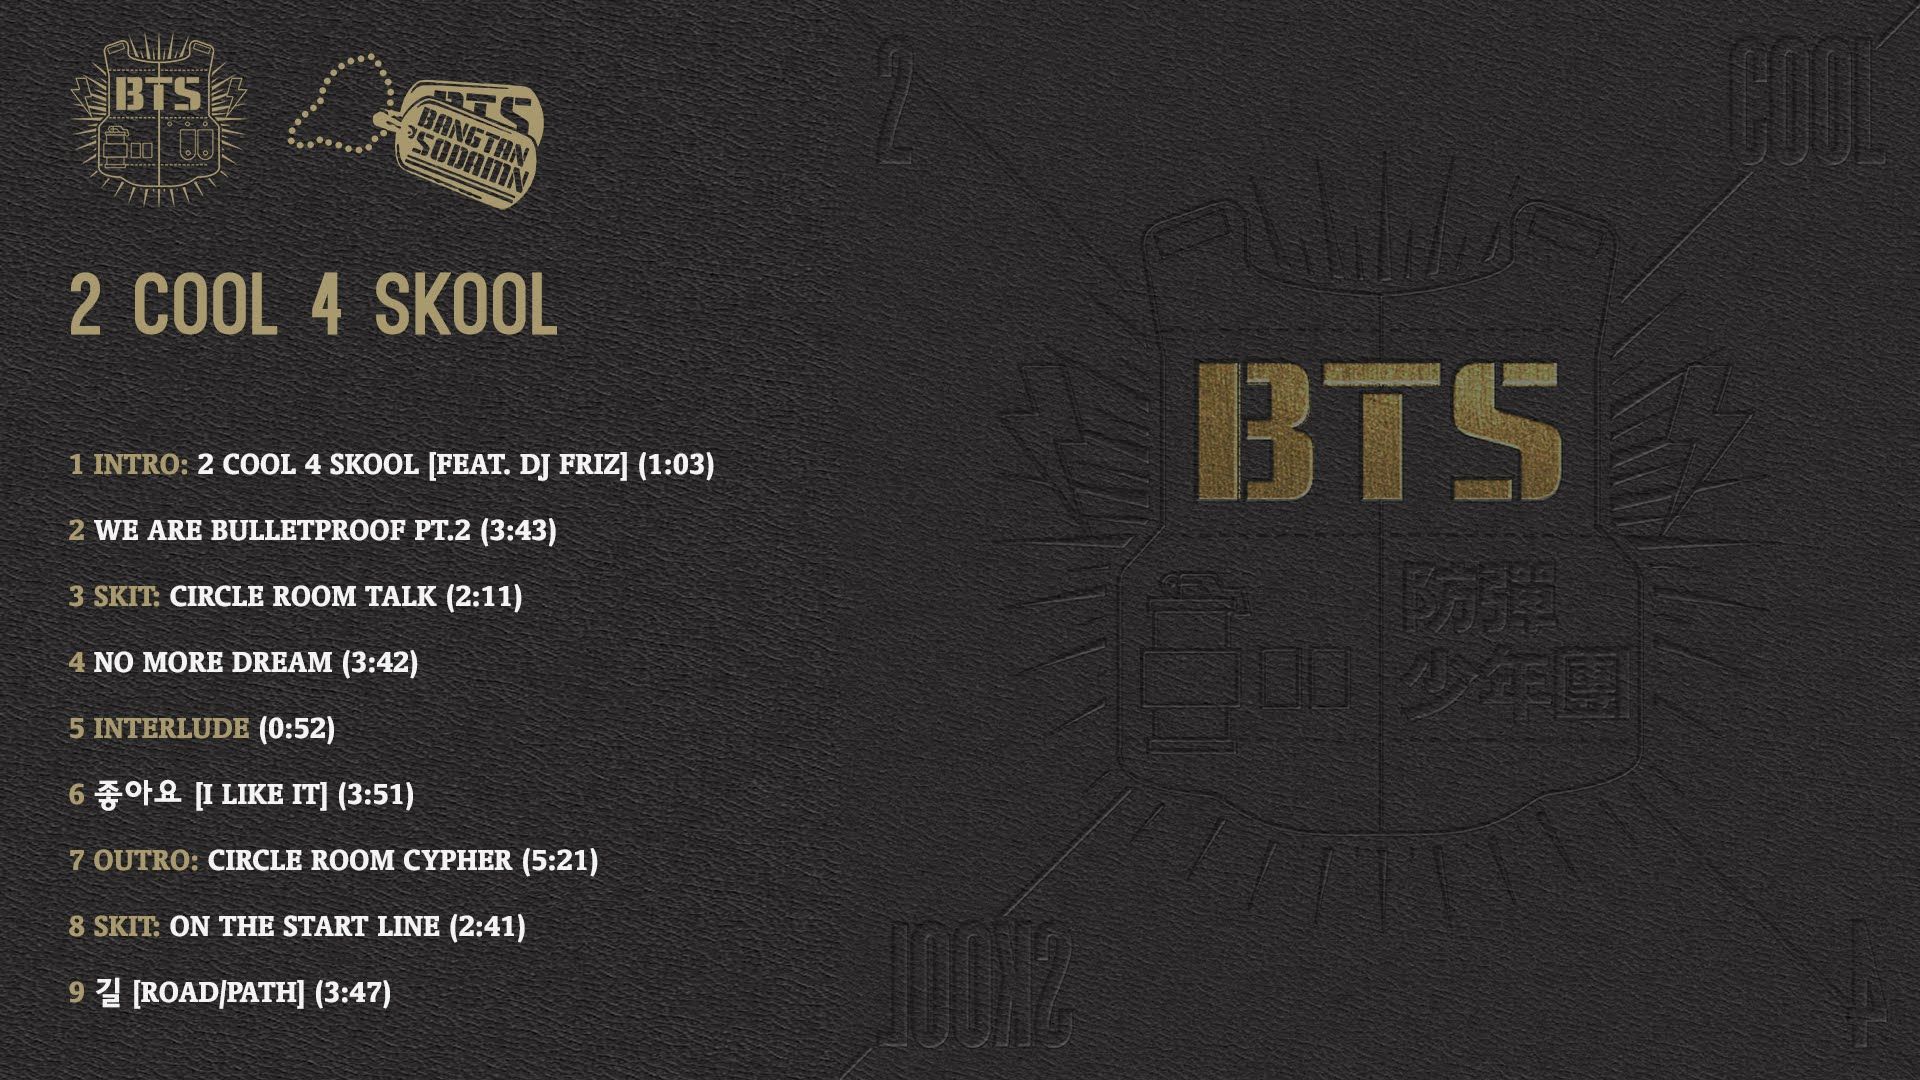 Два бтс. BTS 2 cool 4 Skool альбом. BTS 2 cool 4 Skool альбом обложка. Дебютный альбом БТС 2 cool 4 School. BTS 2 cool 4 School обложка.